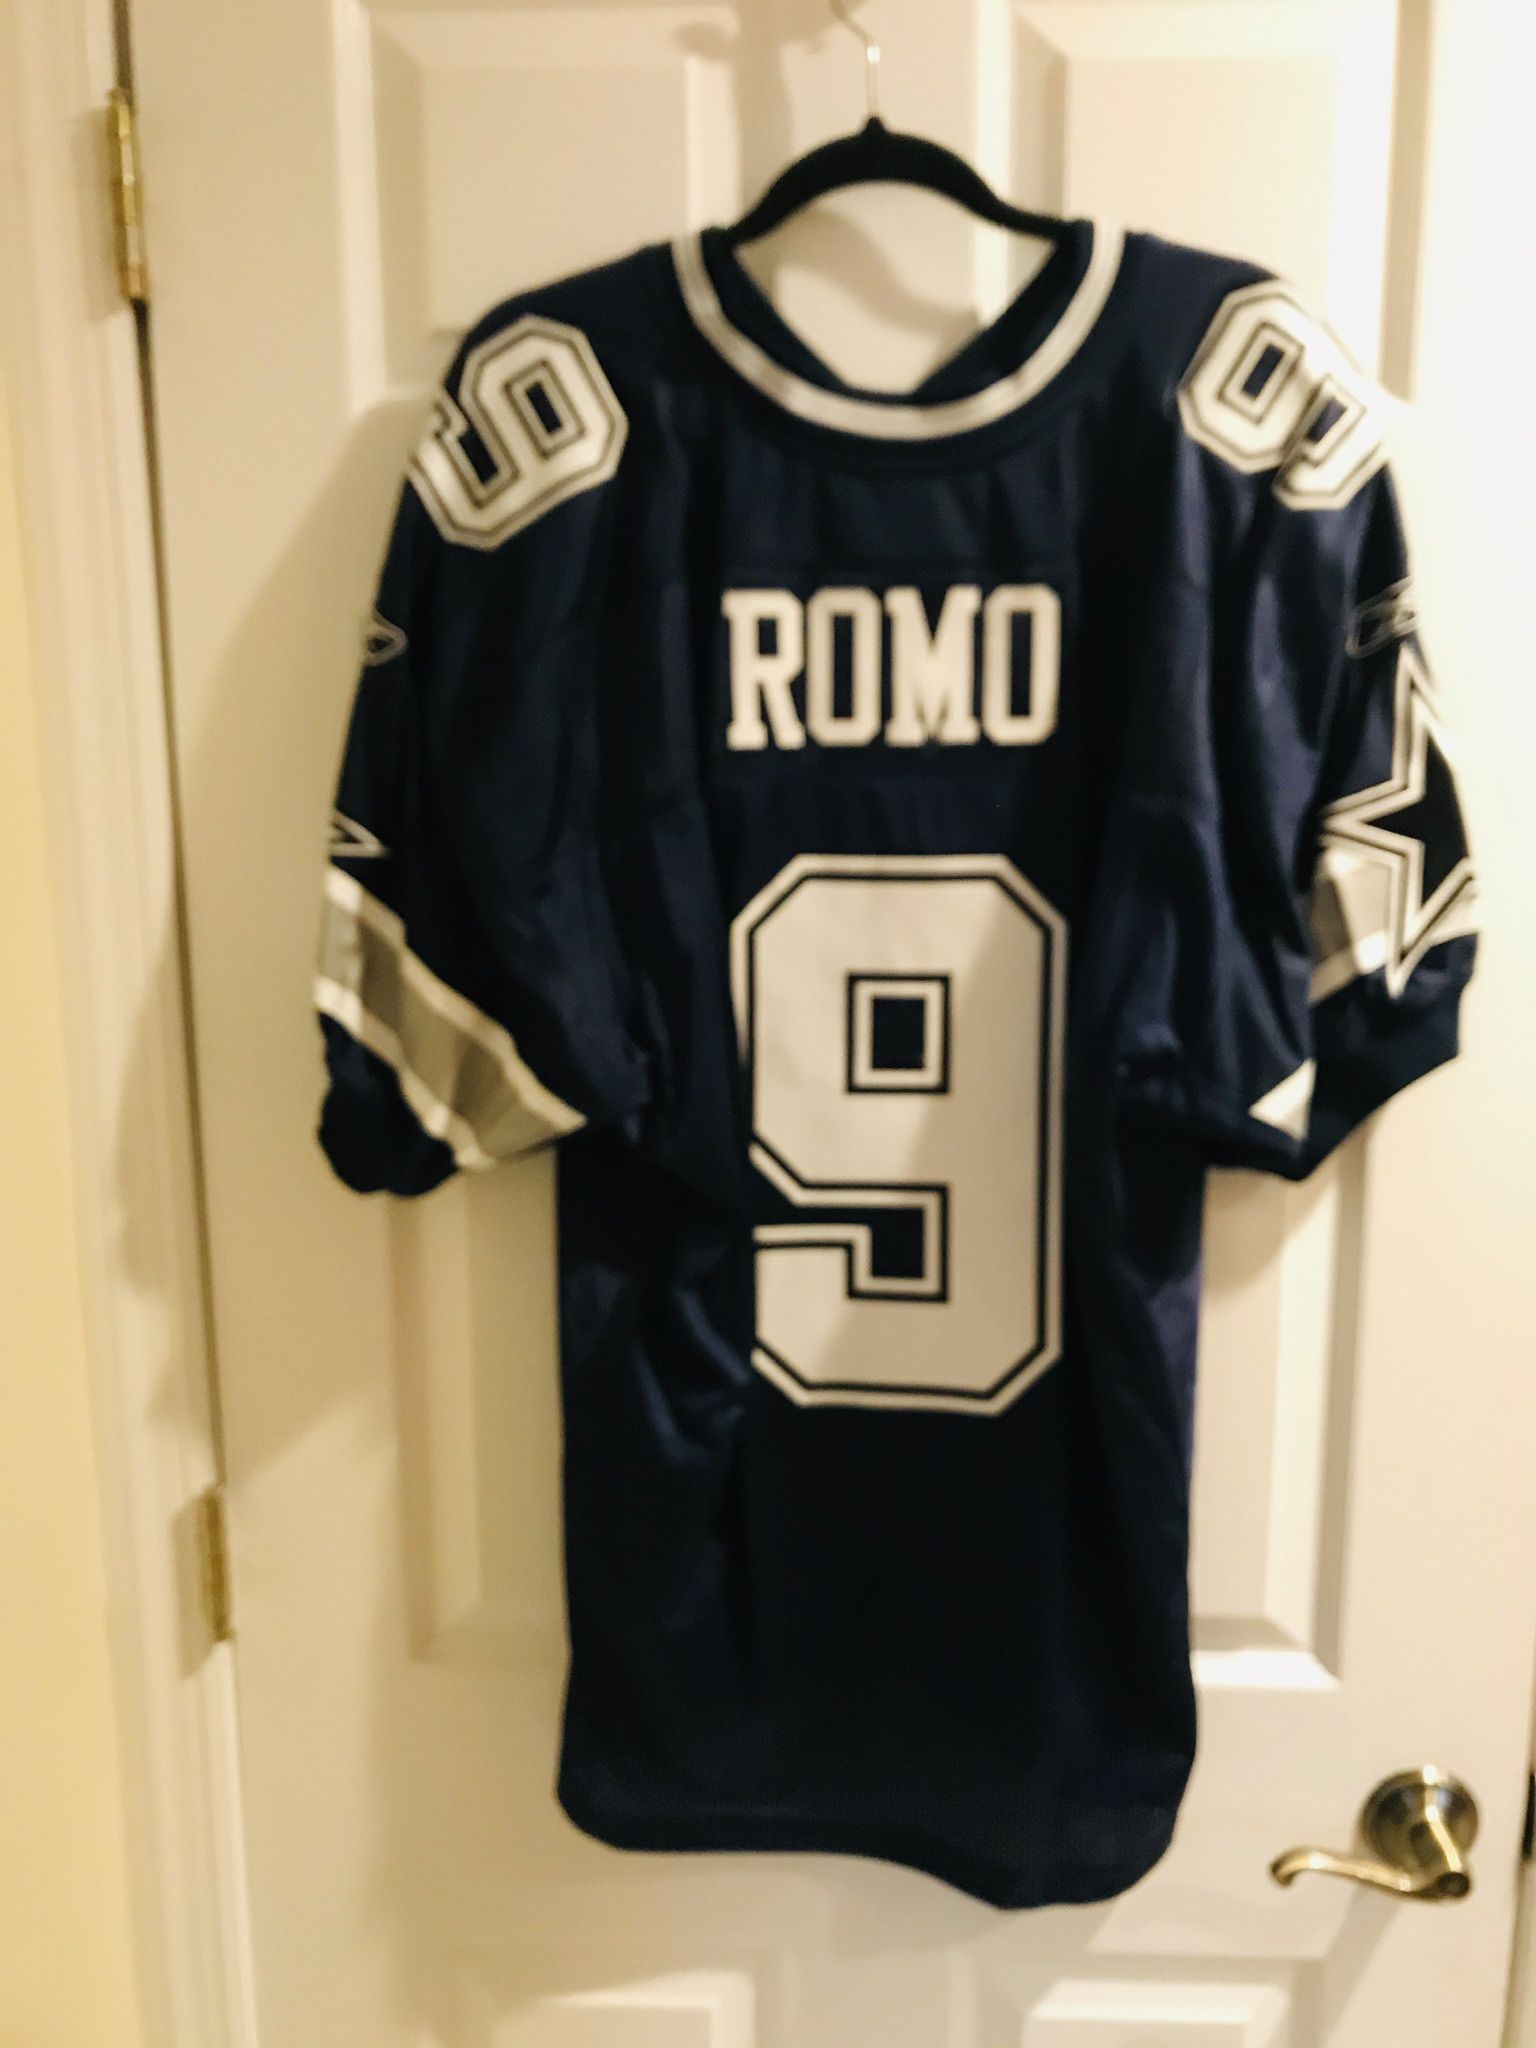 Tony Romo Authentic NFL Jersey